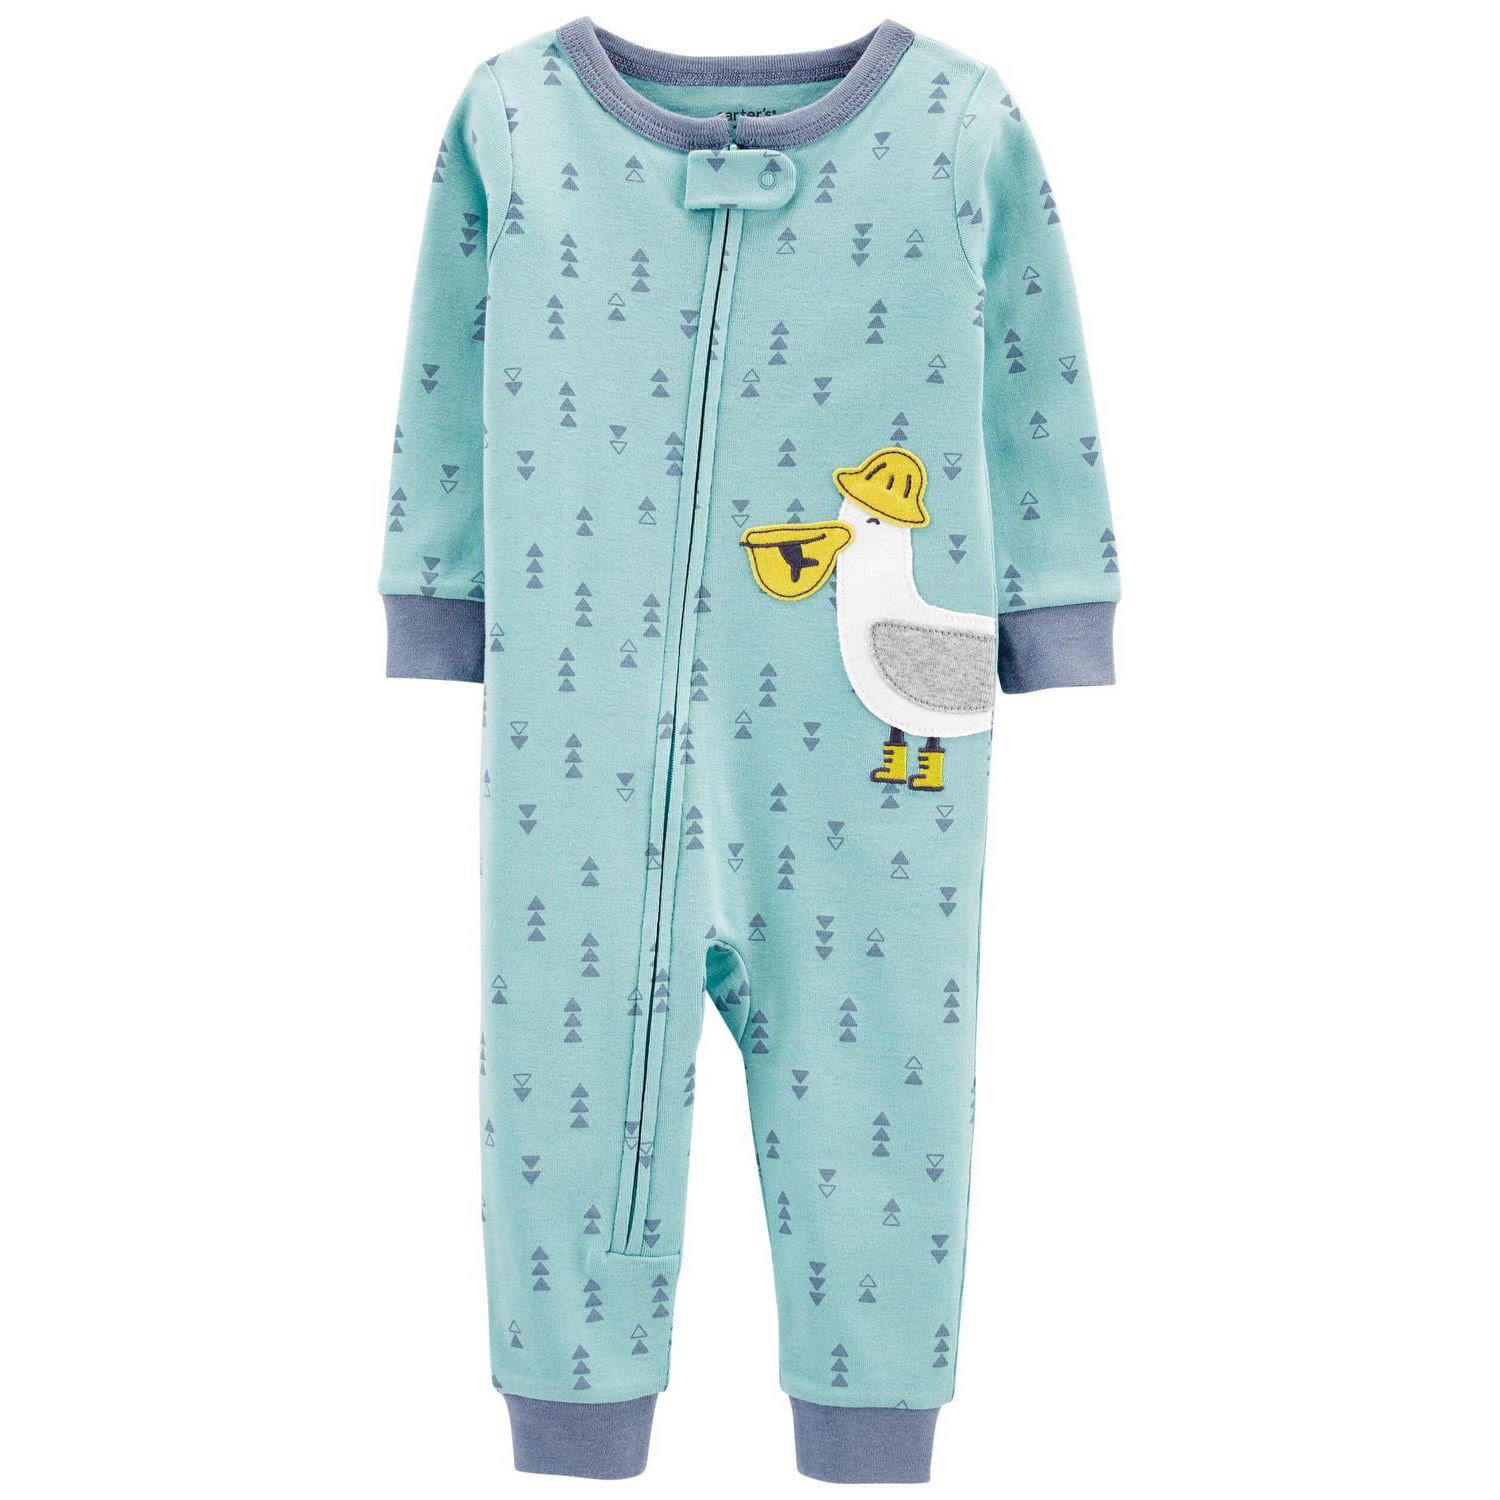 Carter's Pelican Erkek Çocuk Pijama Tulumu 2L728811 Mavi